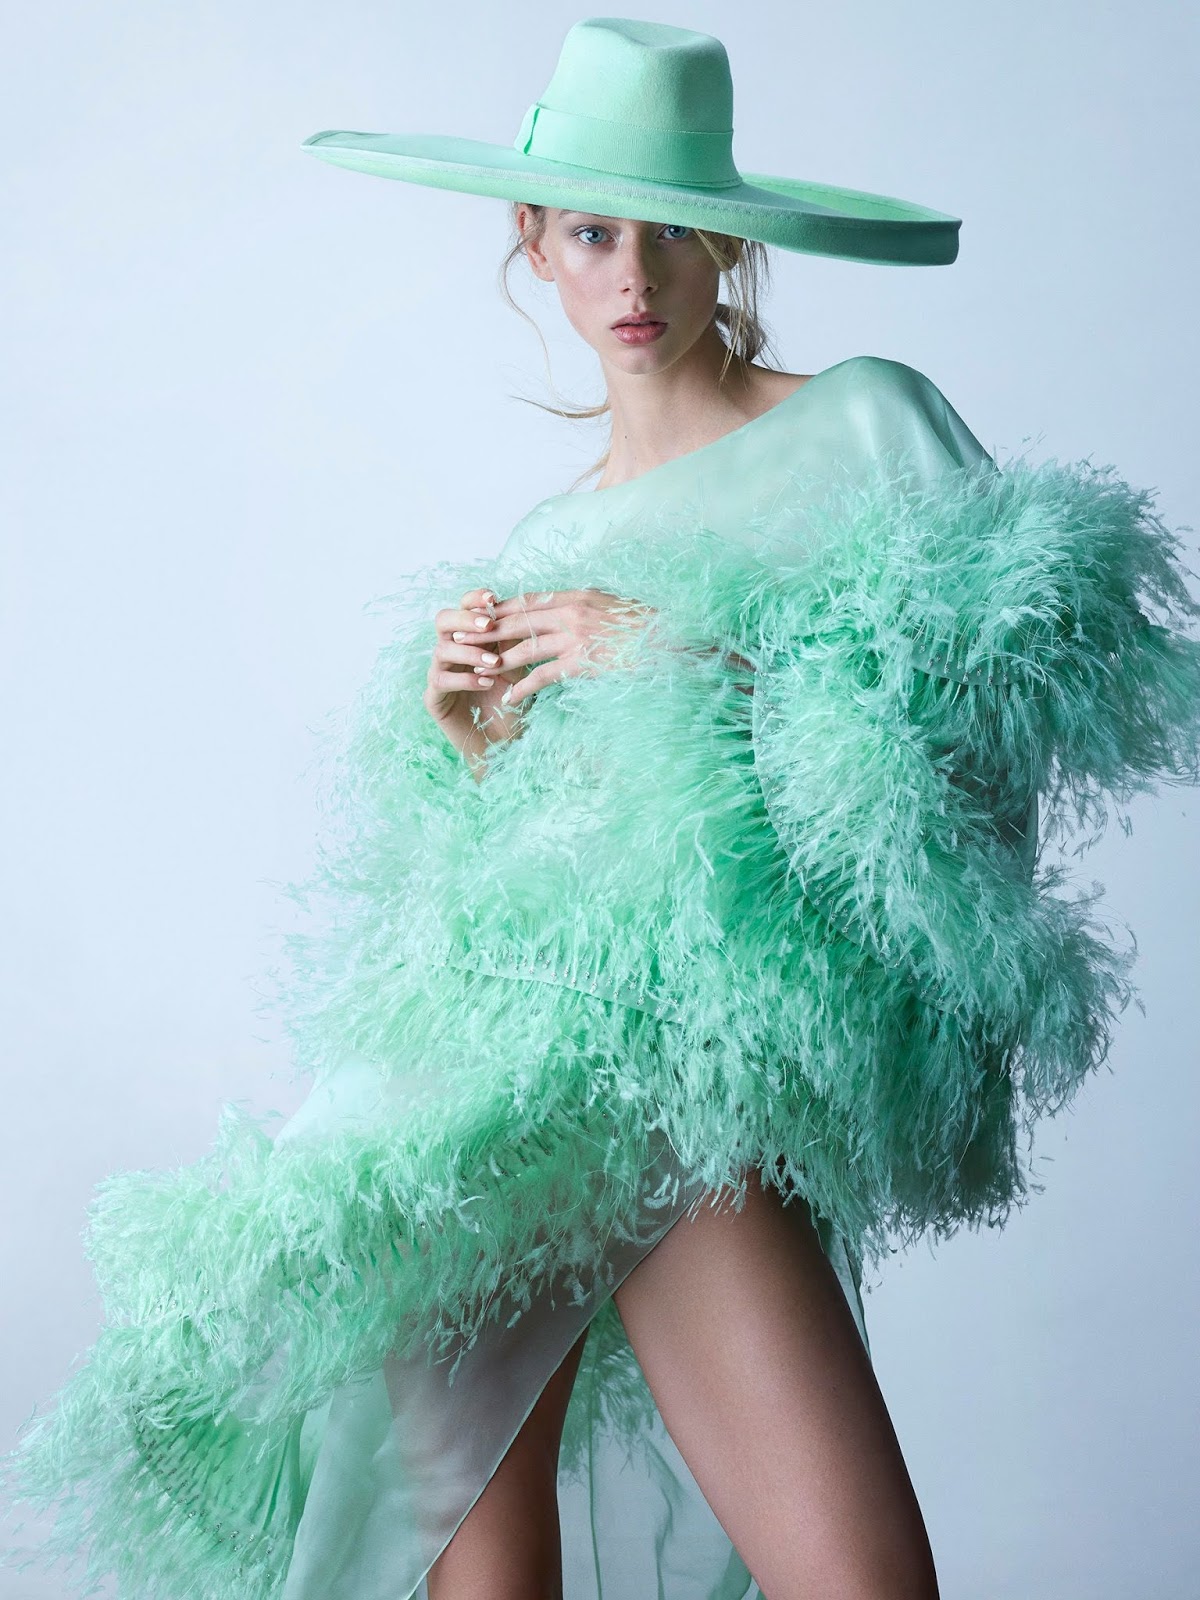 39 Lolas: Lauren de Graaf by Greg Swales for Vogue Taiwan March 2019